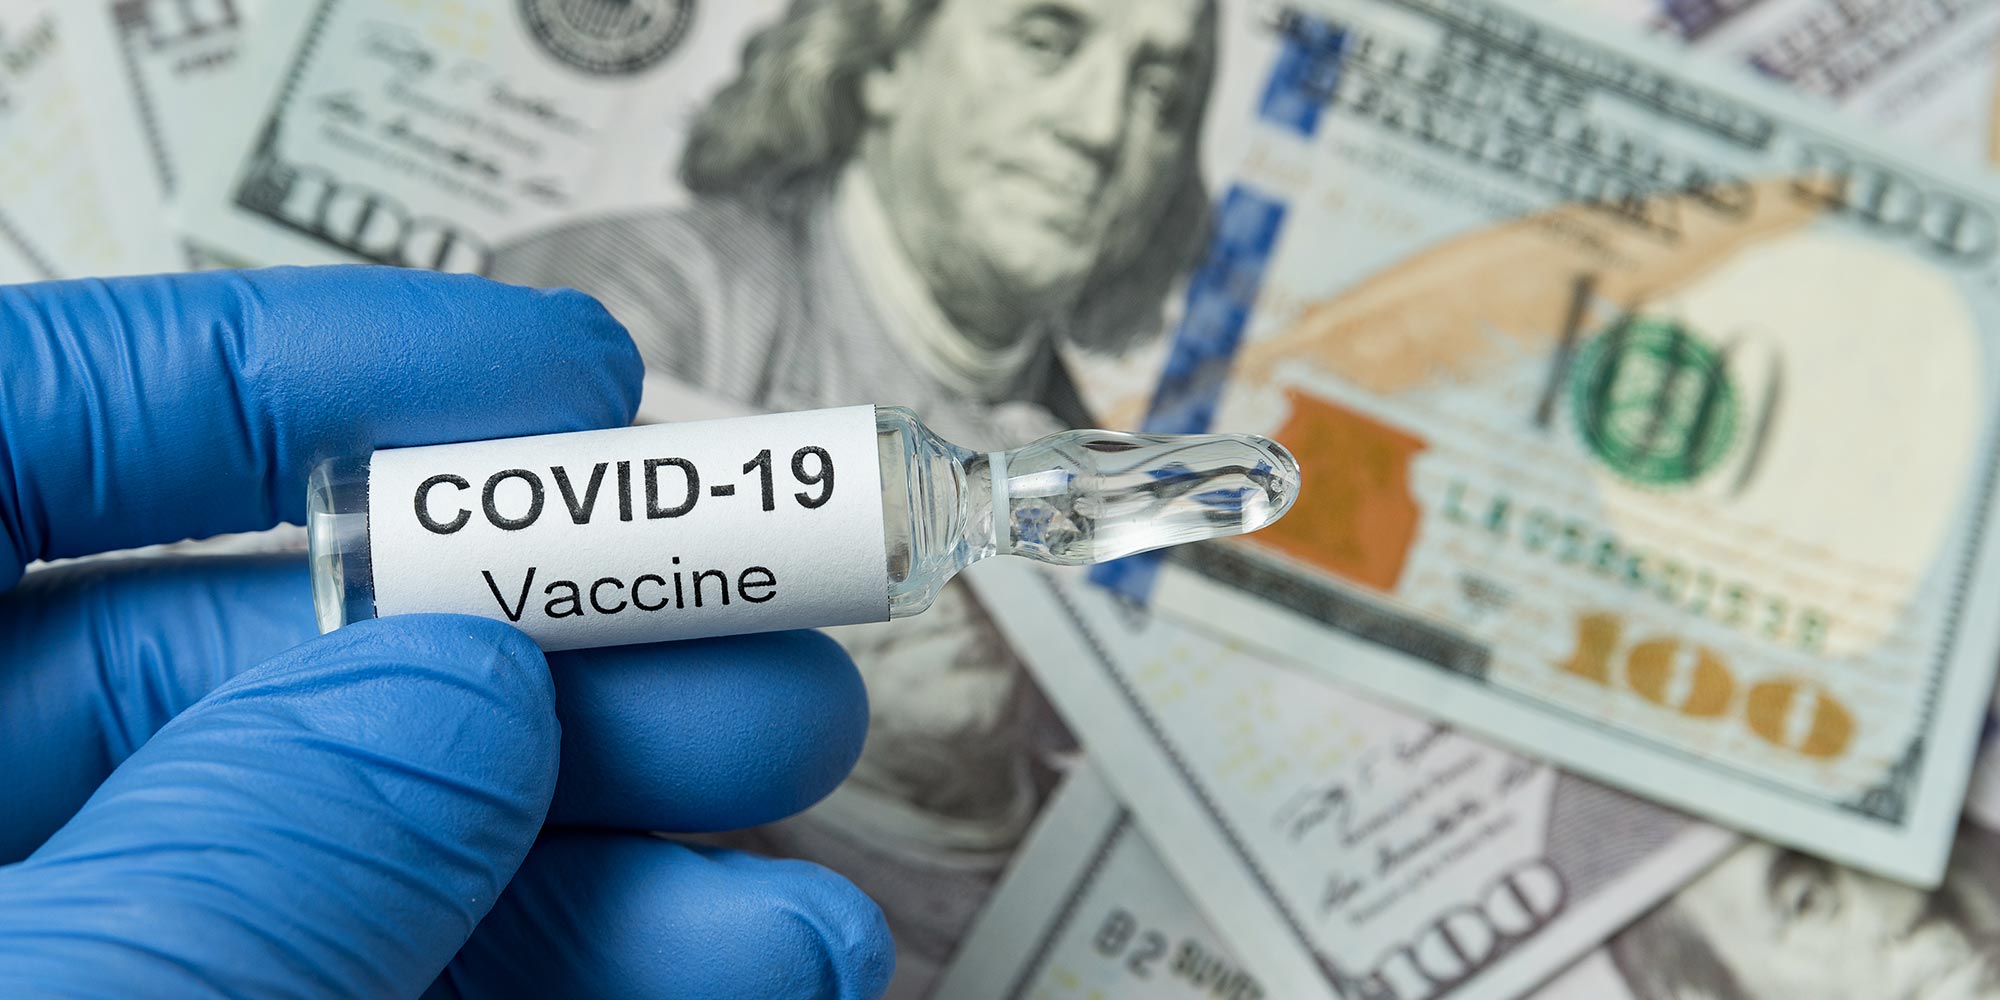 The COVID-19 vaccine market has already generated billions